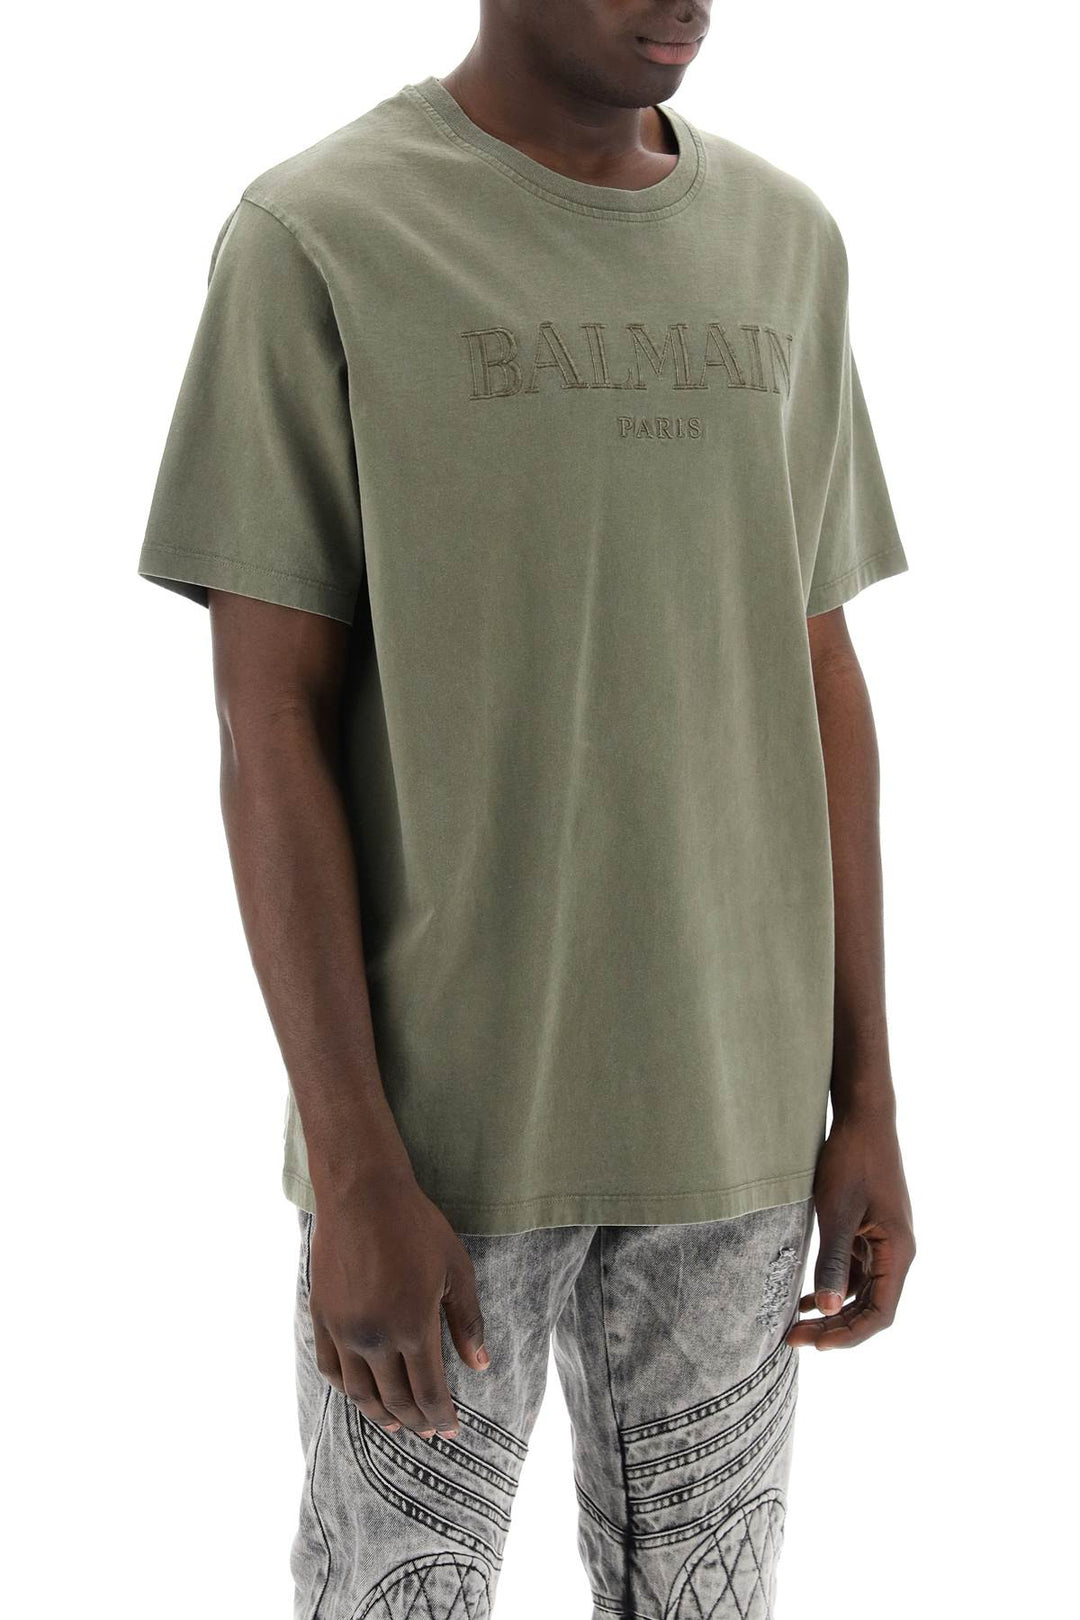 Balmain Vintage T Shirt   Green